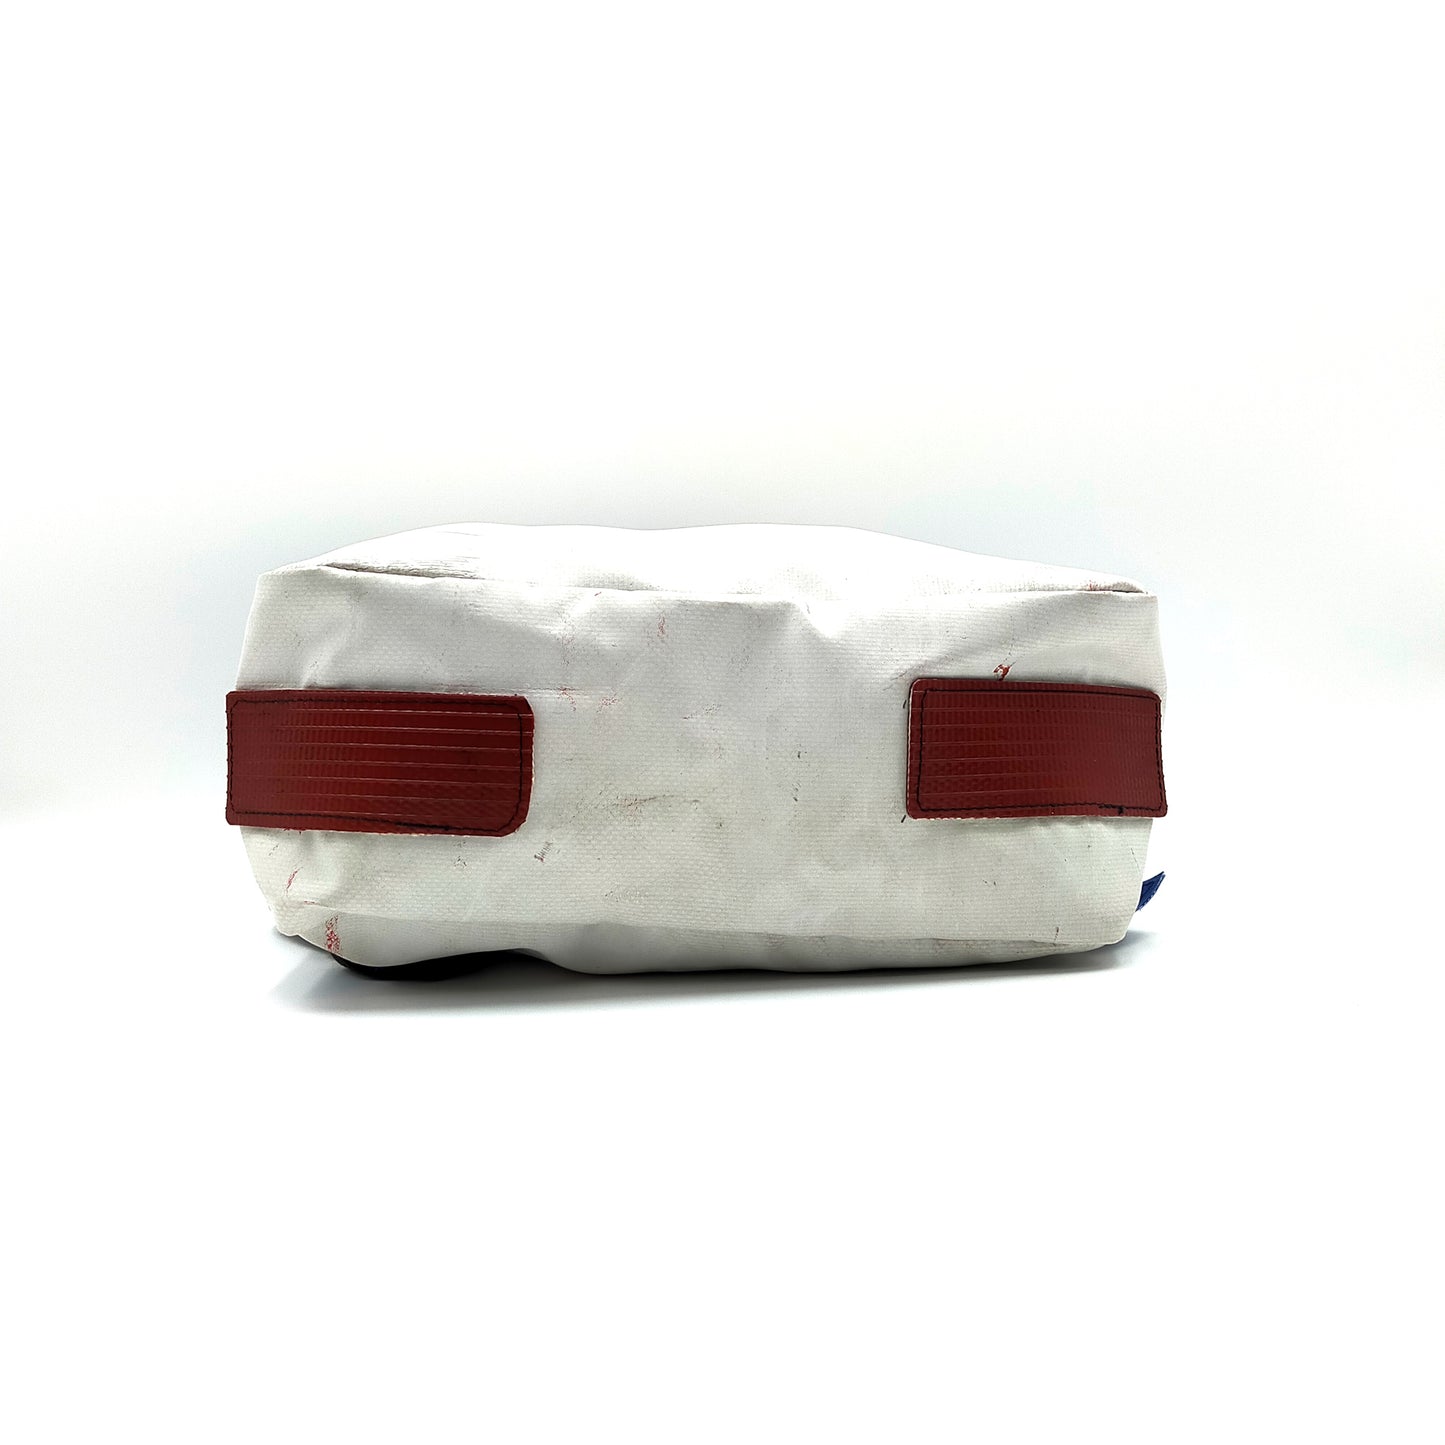 Birch Backpack – White/Blue – BB09123